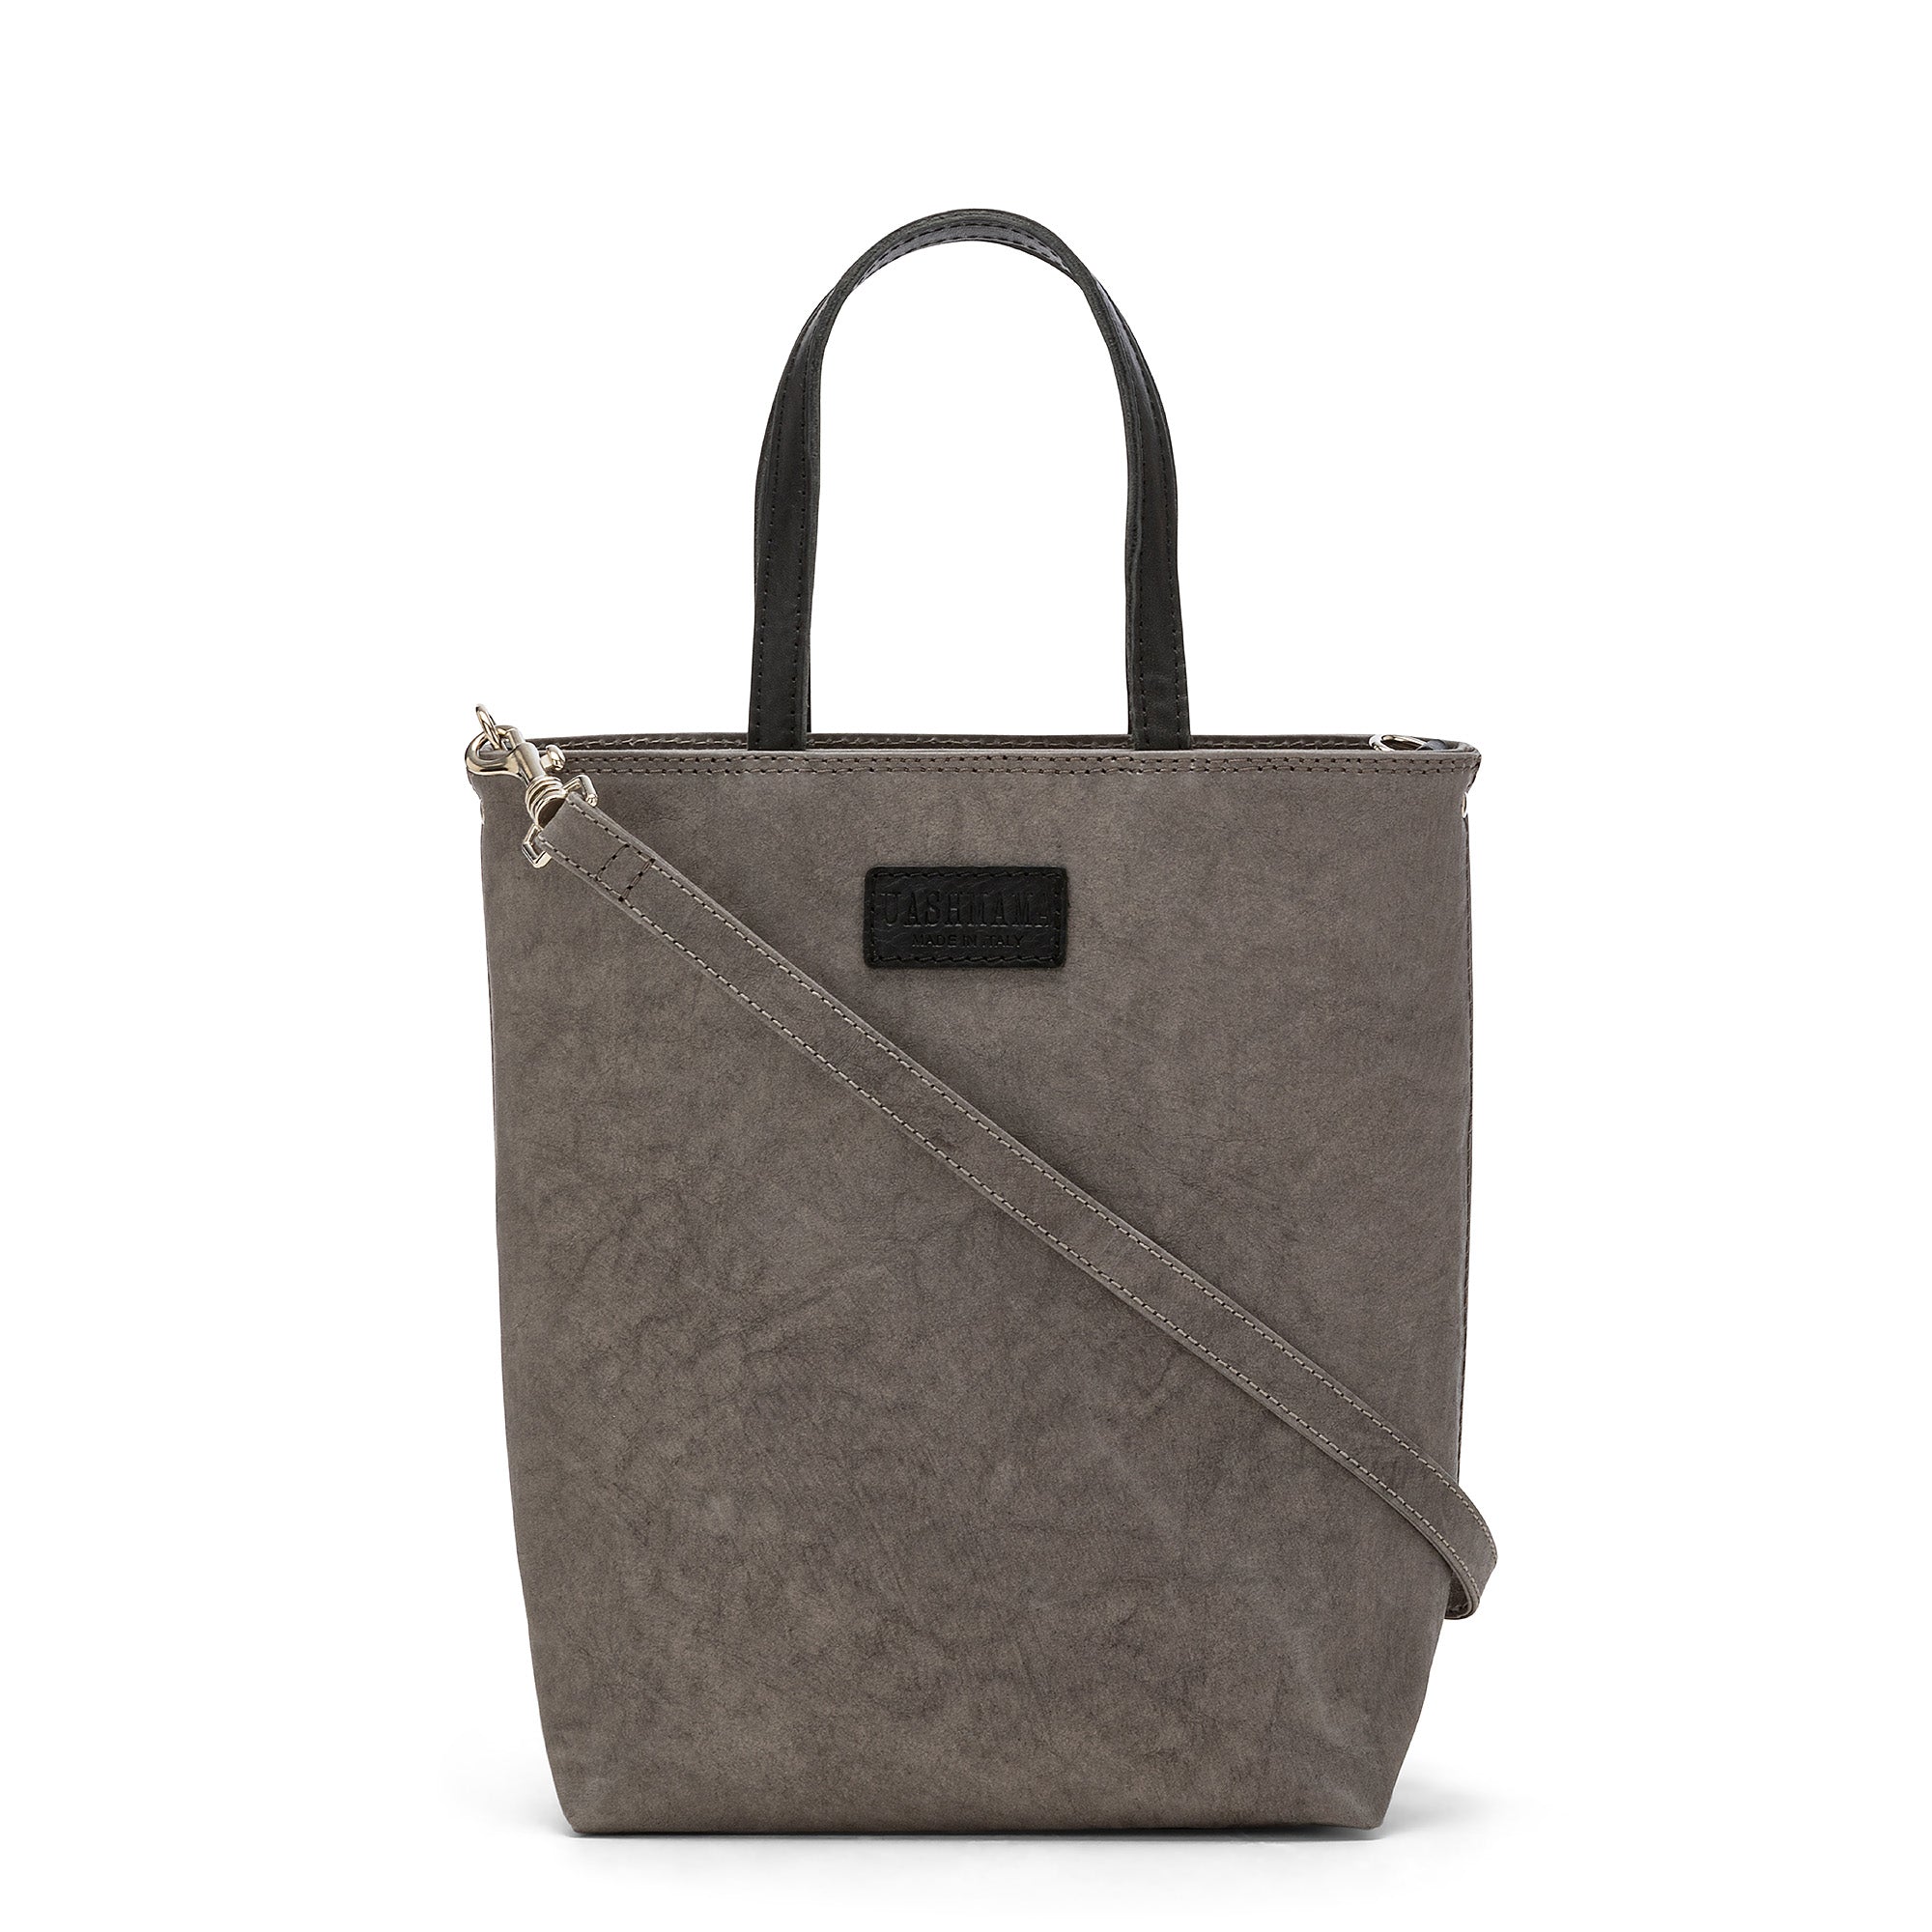 Missouri Collection Leather Crossbody Handbag